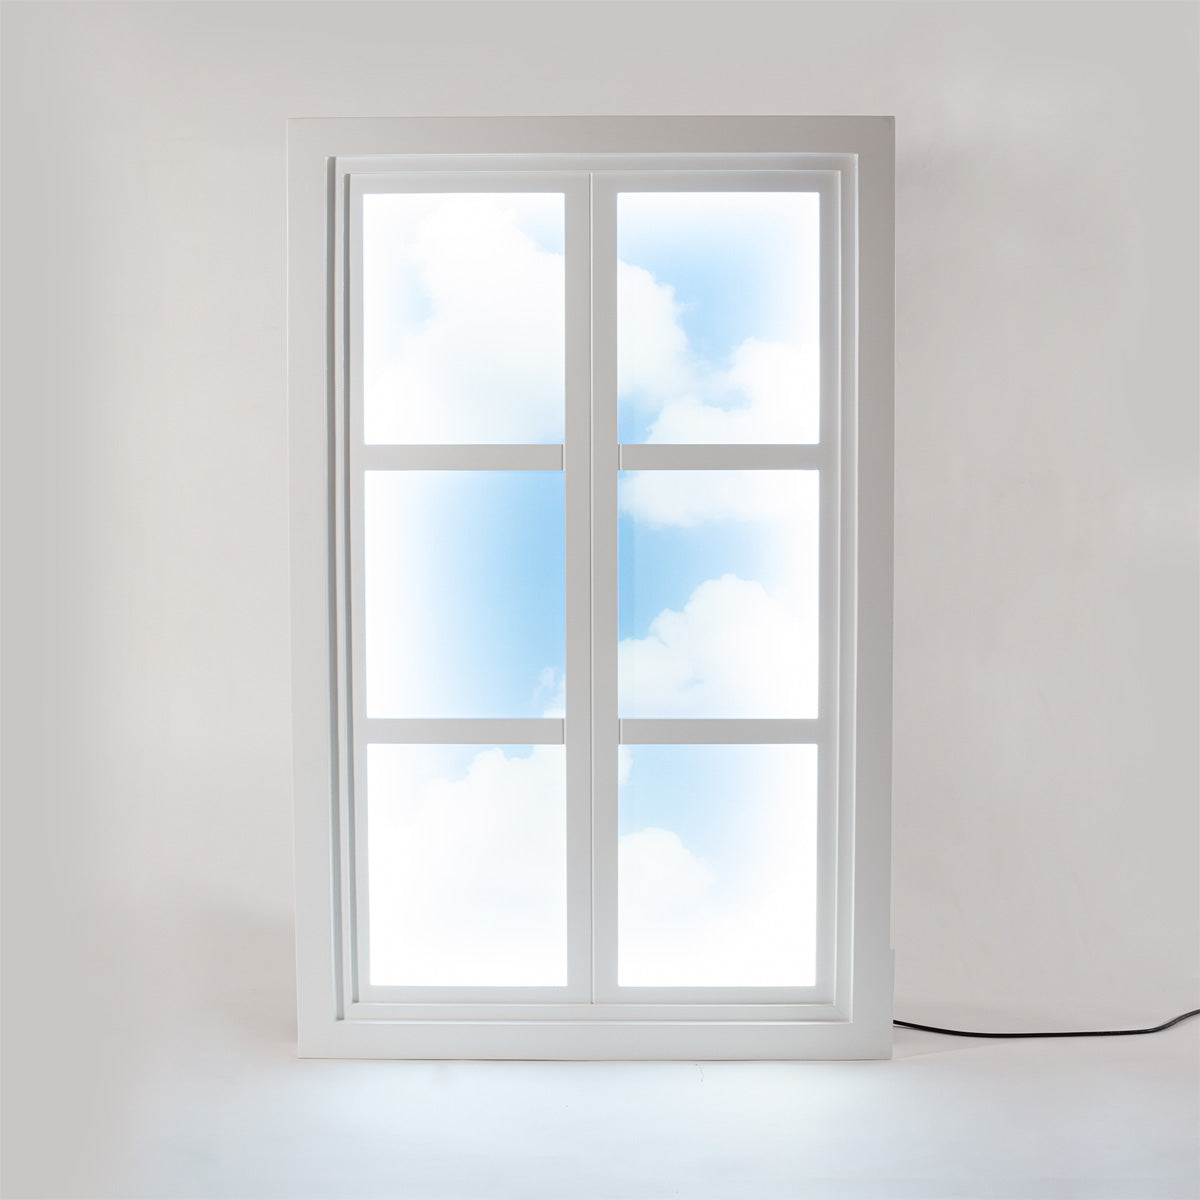 Suite Window Lamp - Seletti